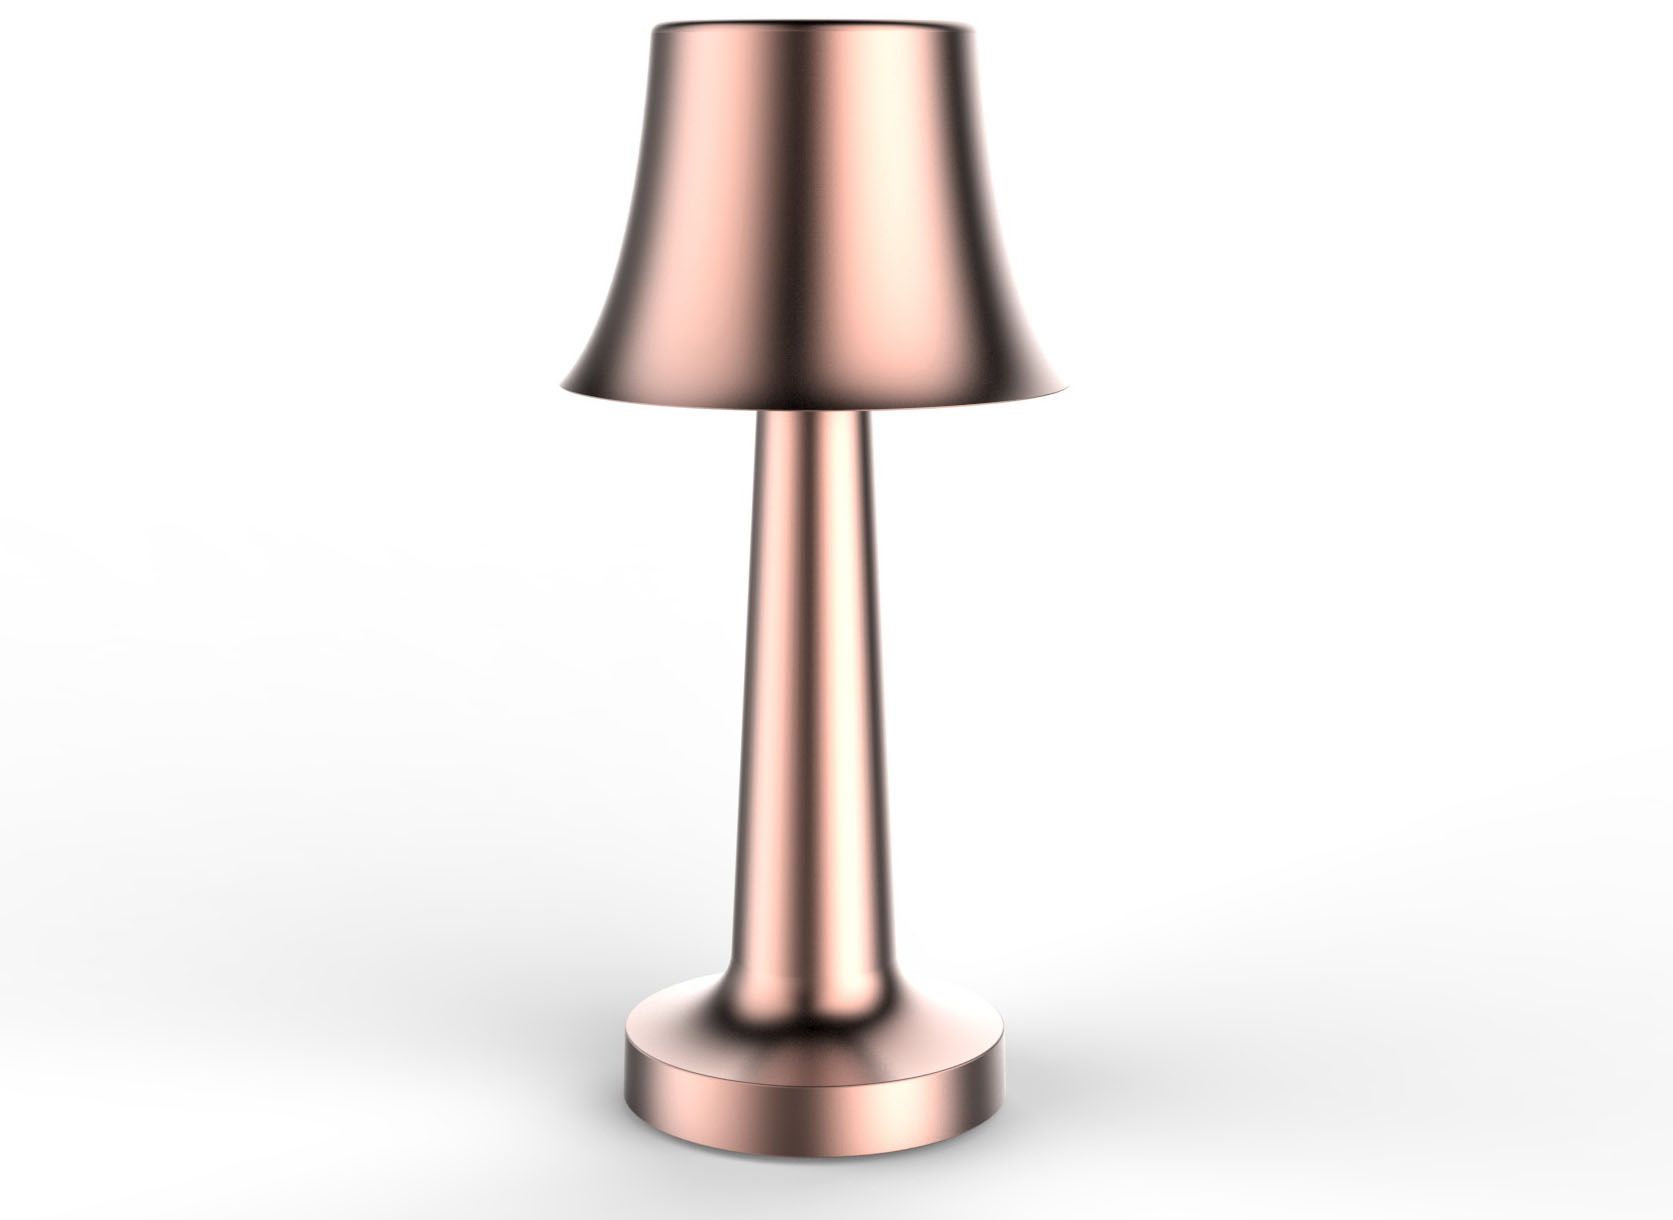 LED Retro Lamp/Copper Table Lamp for Rustic Decor - ETLED-53D. LED Retro Lamp/Copper Table Lamp for Rustic Decor